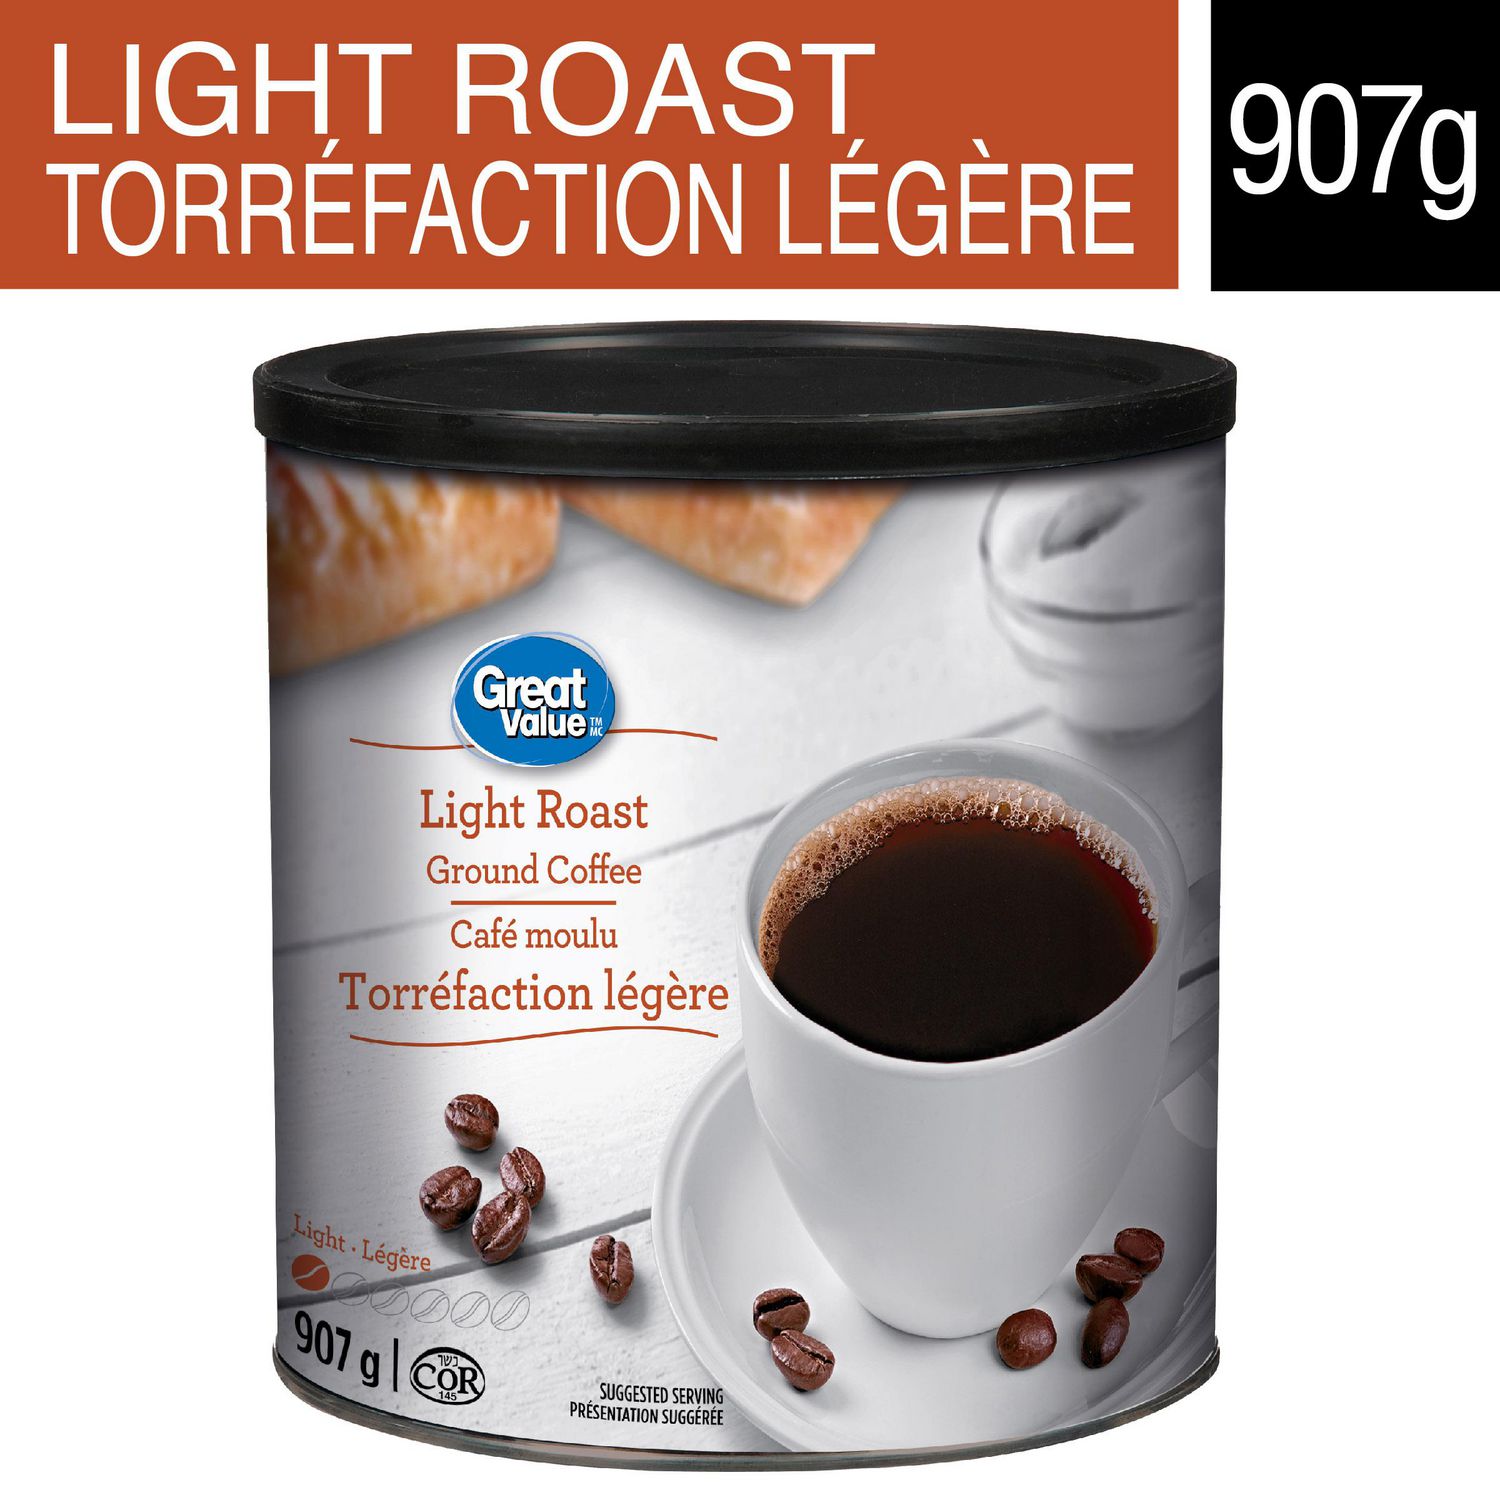 Great Value Light Roast Ground Coffee Walmart Canada